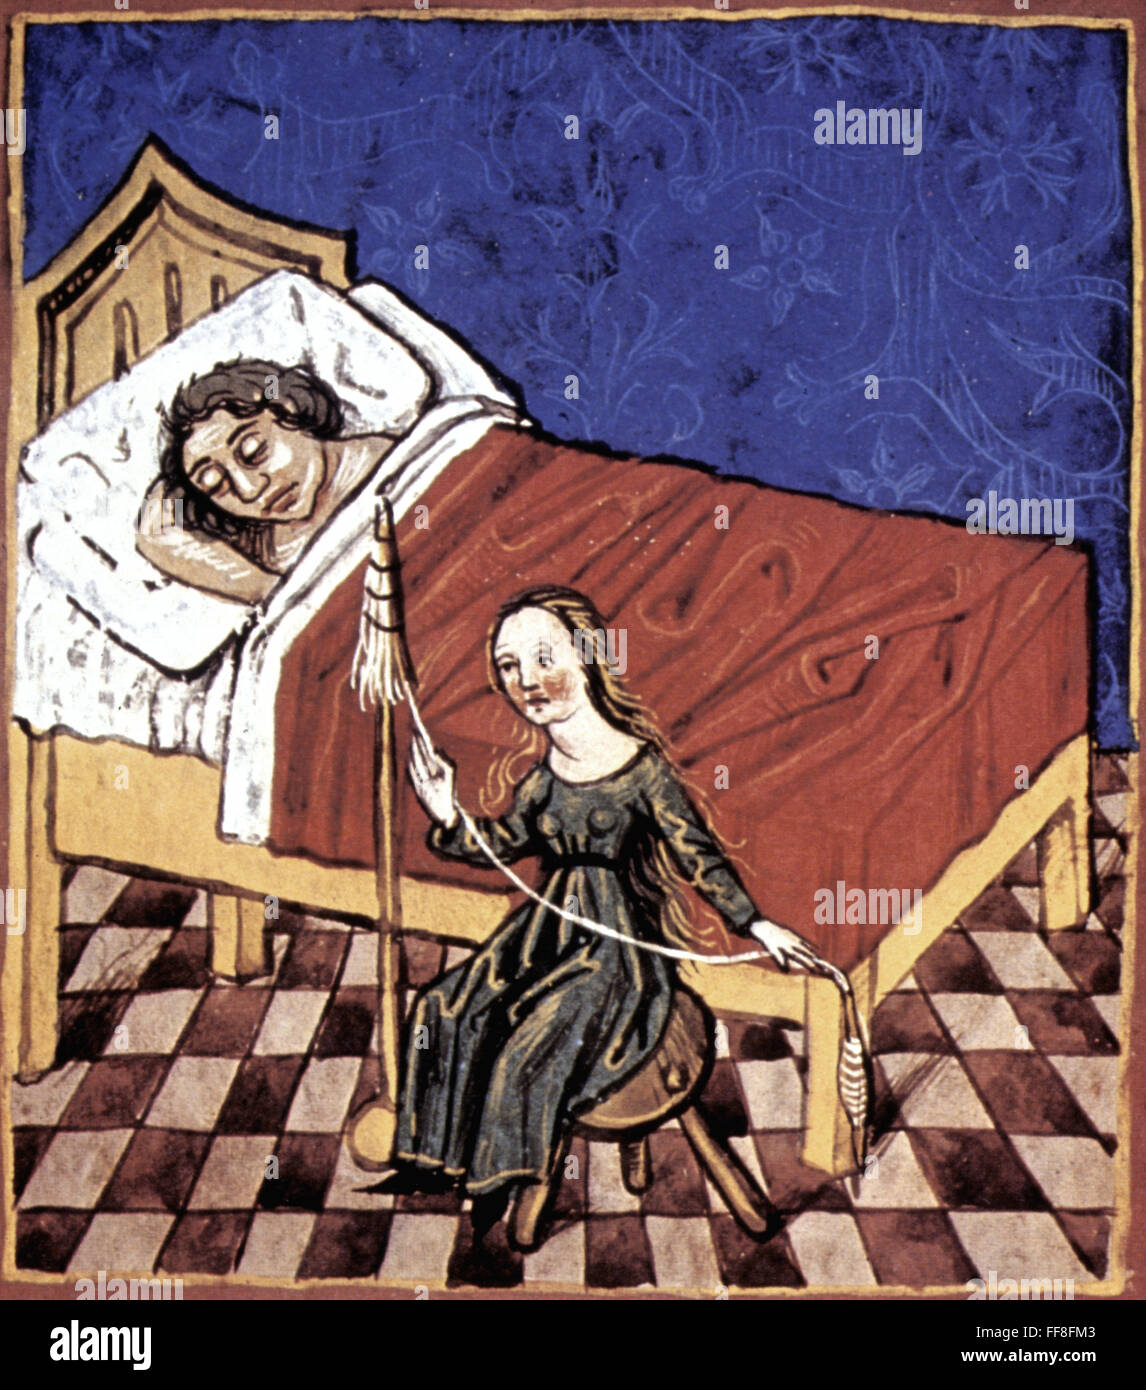 FOUR HUMORS: MELANCHOLIA. /nOne of the four humors, Melancholia, according to physician Galen. Medieval manuscript illumination. Stock Photo